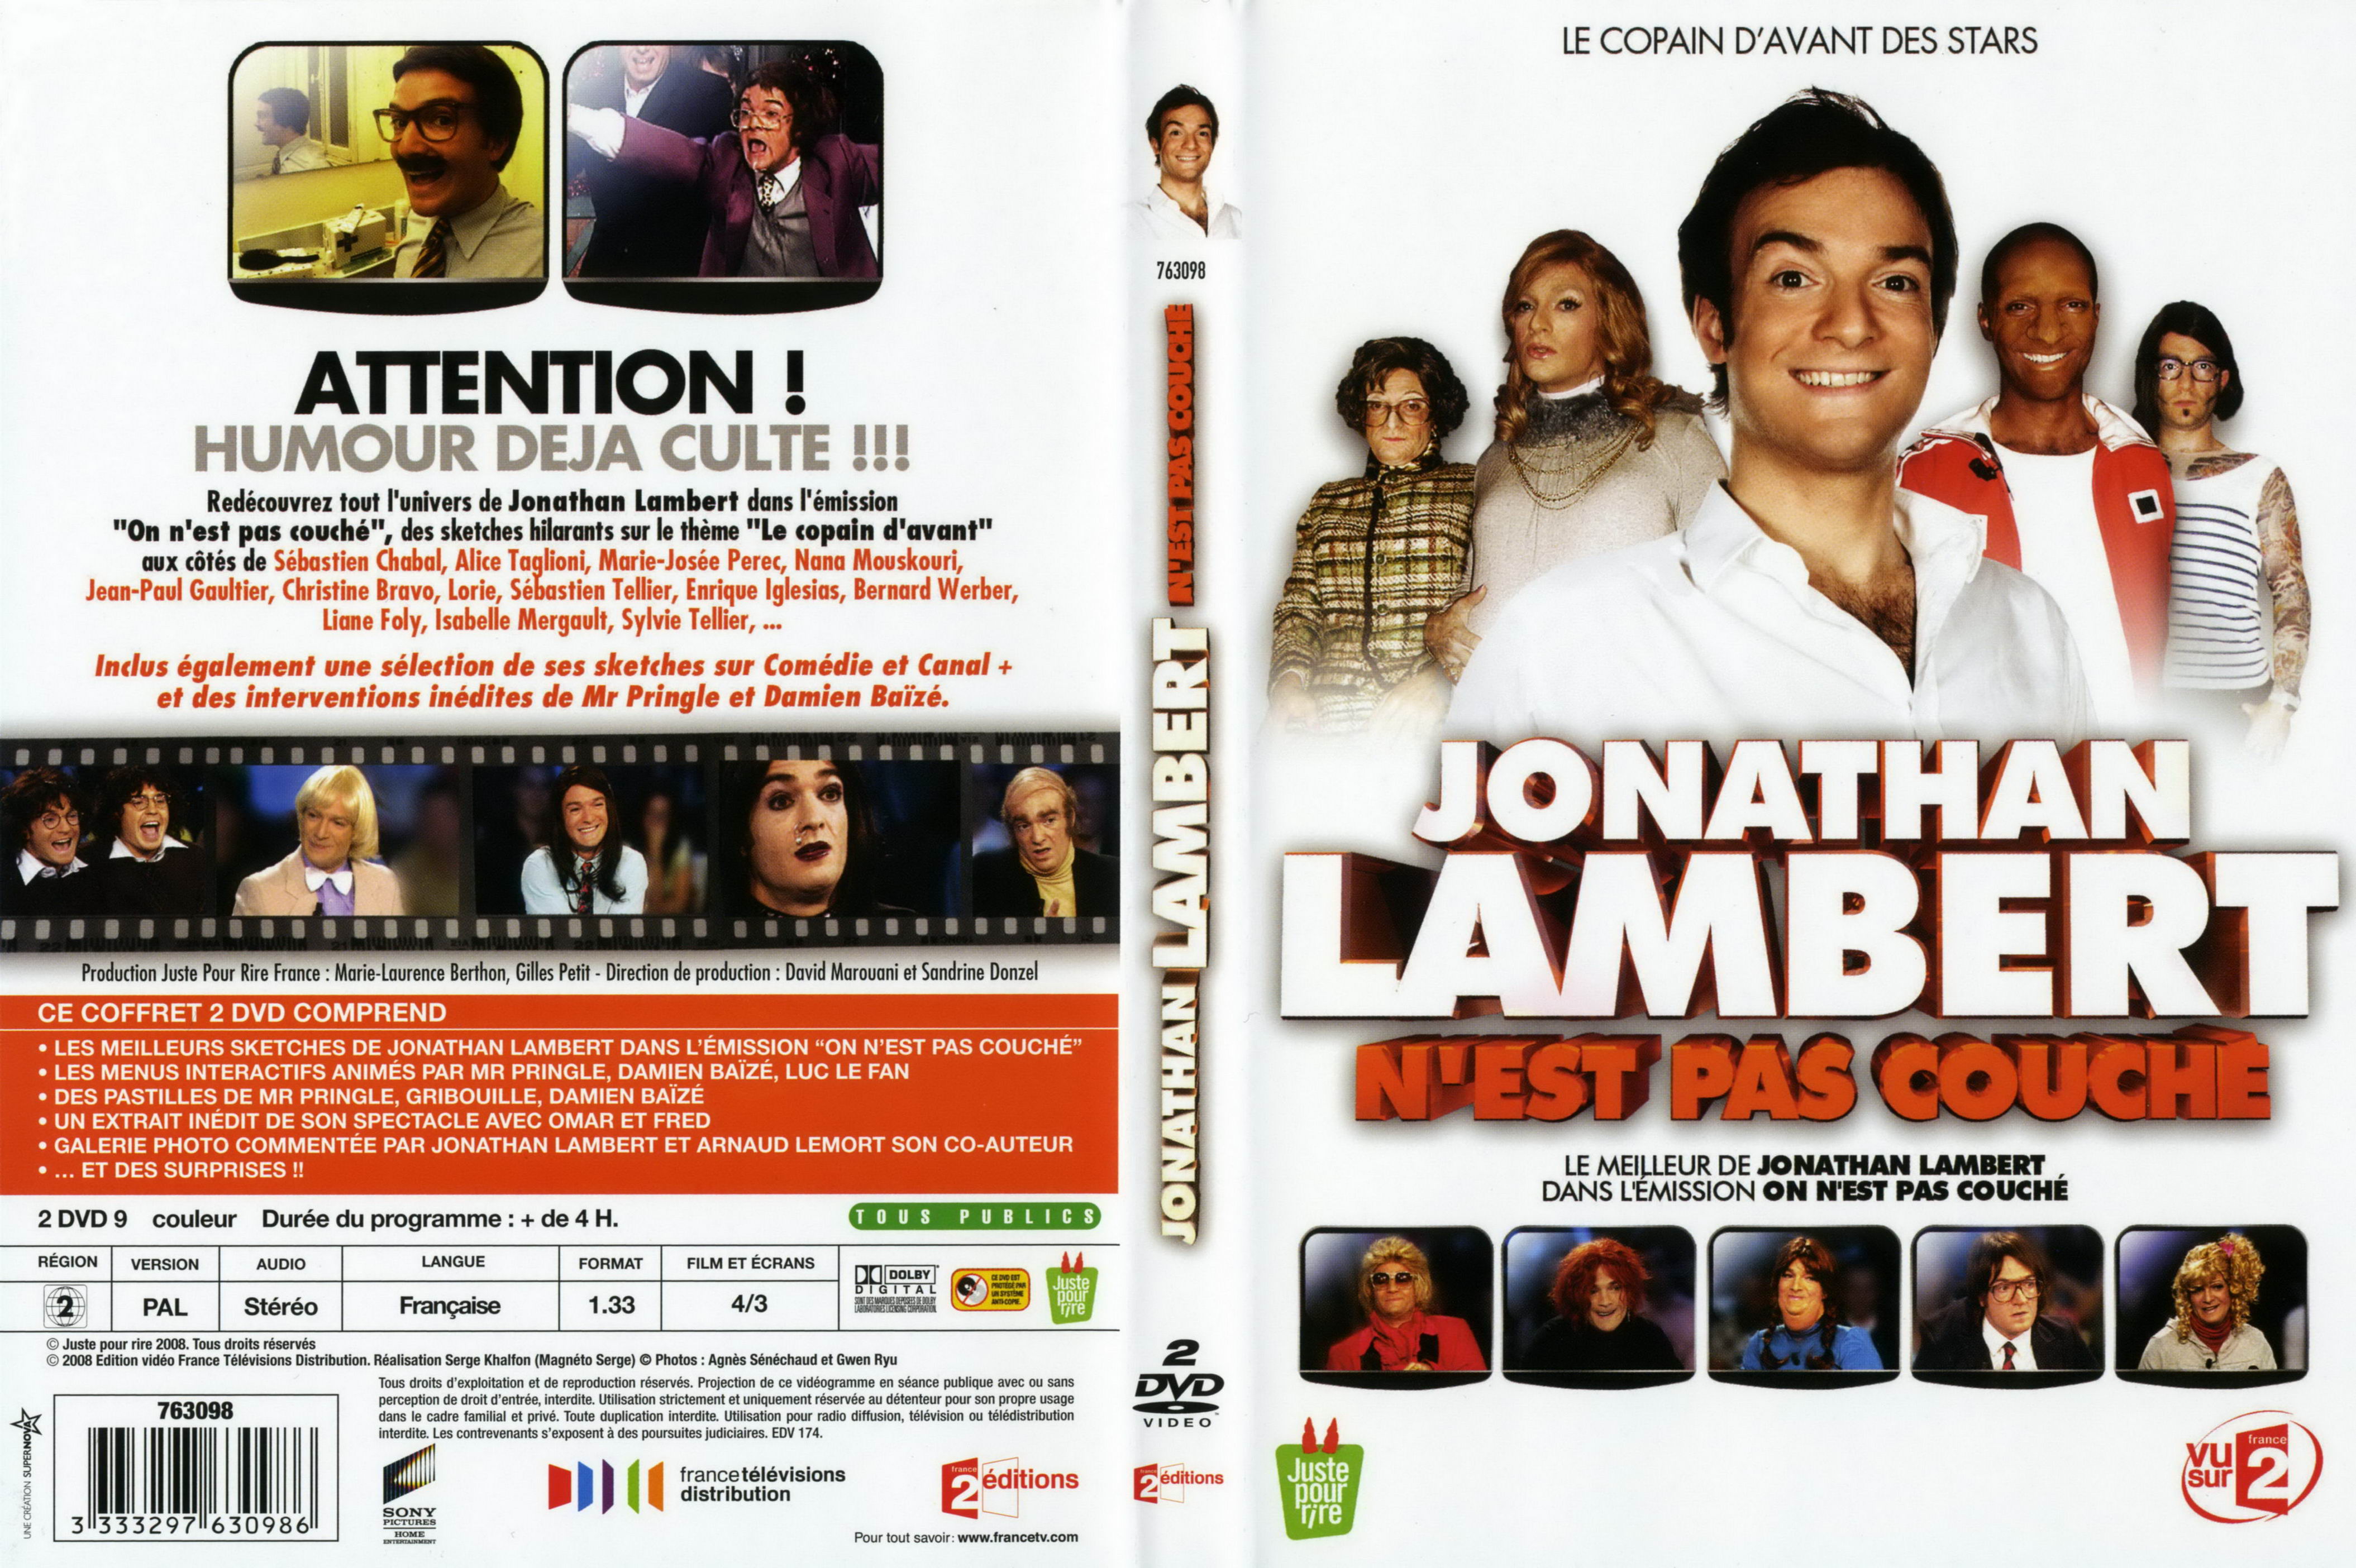 Jaquette DVD Jonathan Lambert n